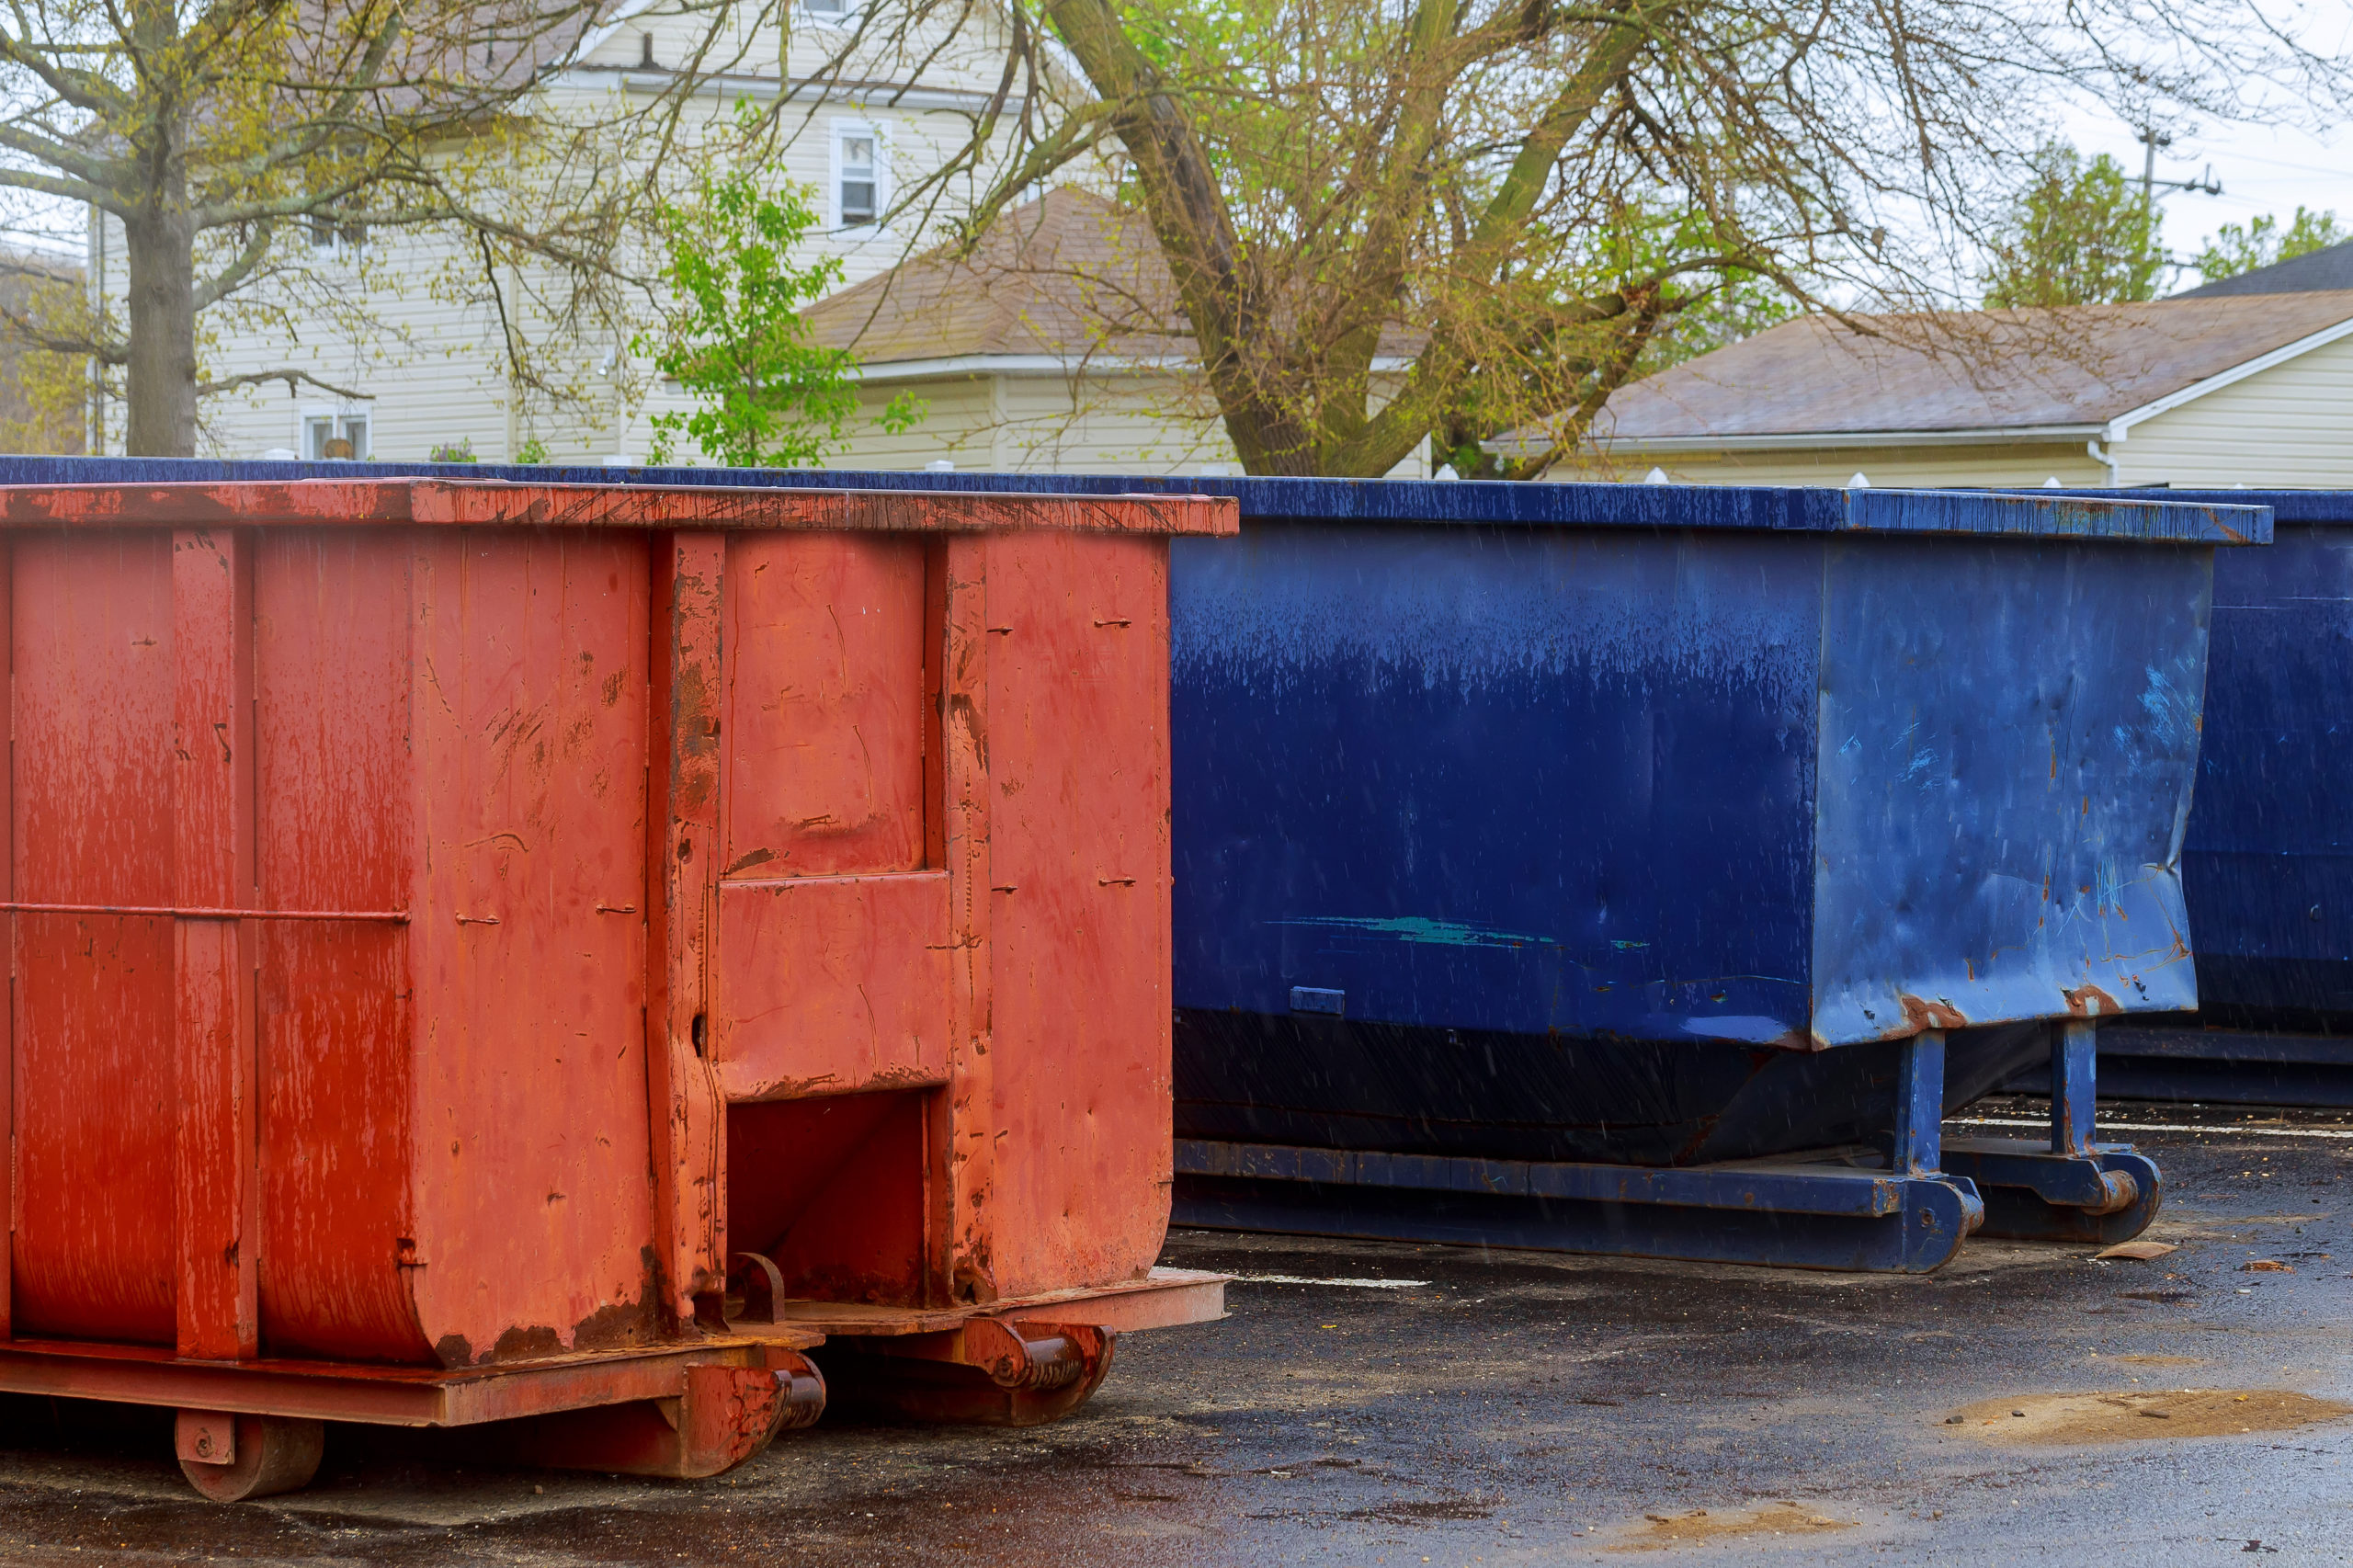 A dumpster ready to haul away junk